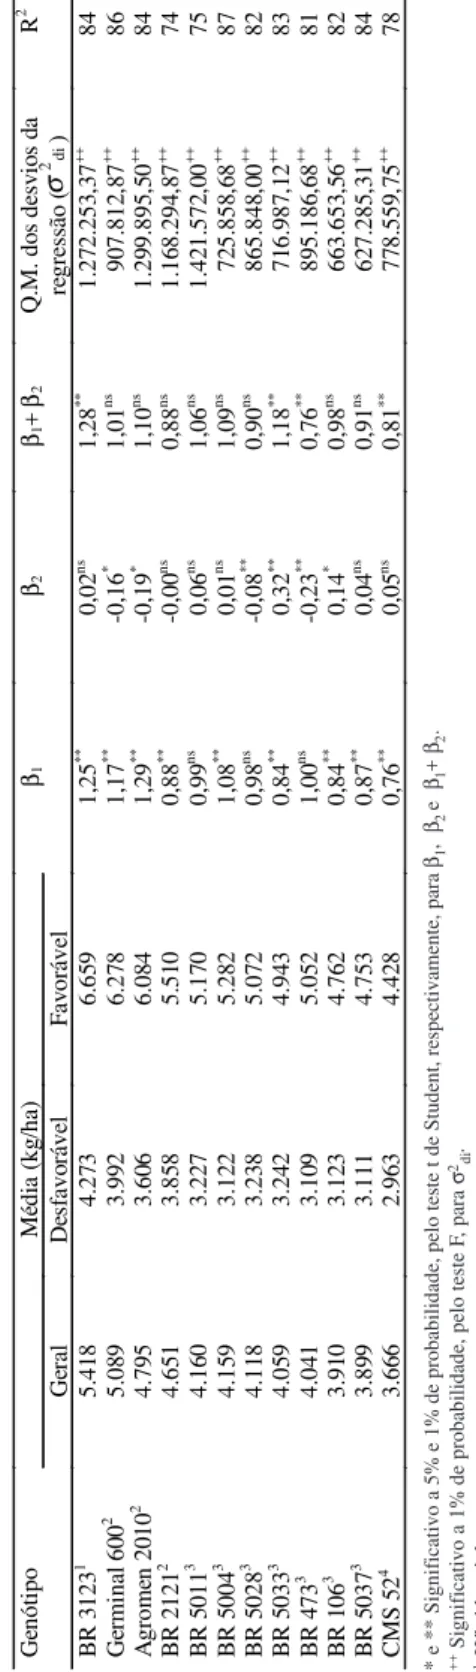 TABELA  2.Estimativas dos parâmetros de adaptabilidade e estabilidade de 12 genótipos de milho no Nordeste brasileiro, nos anos de 1995/96/97